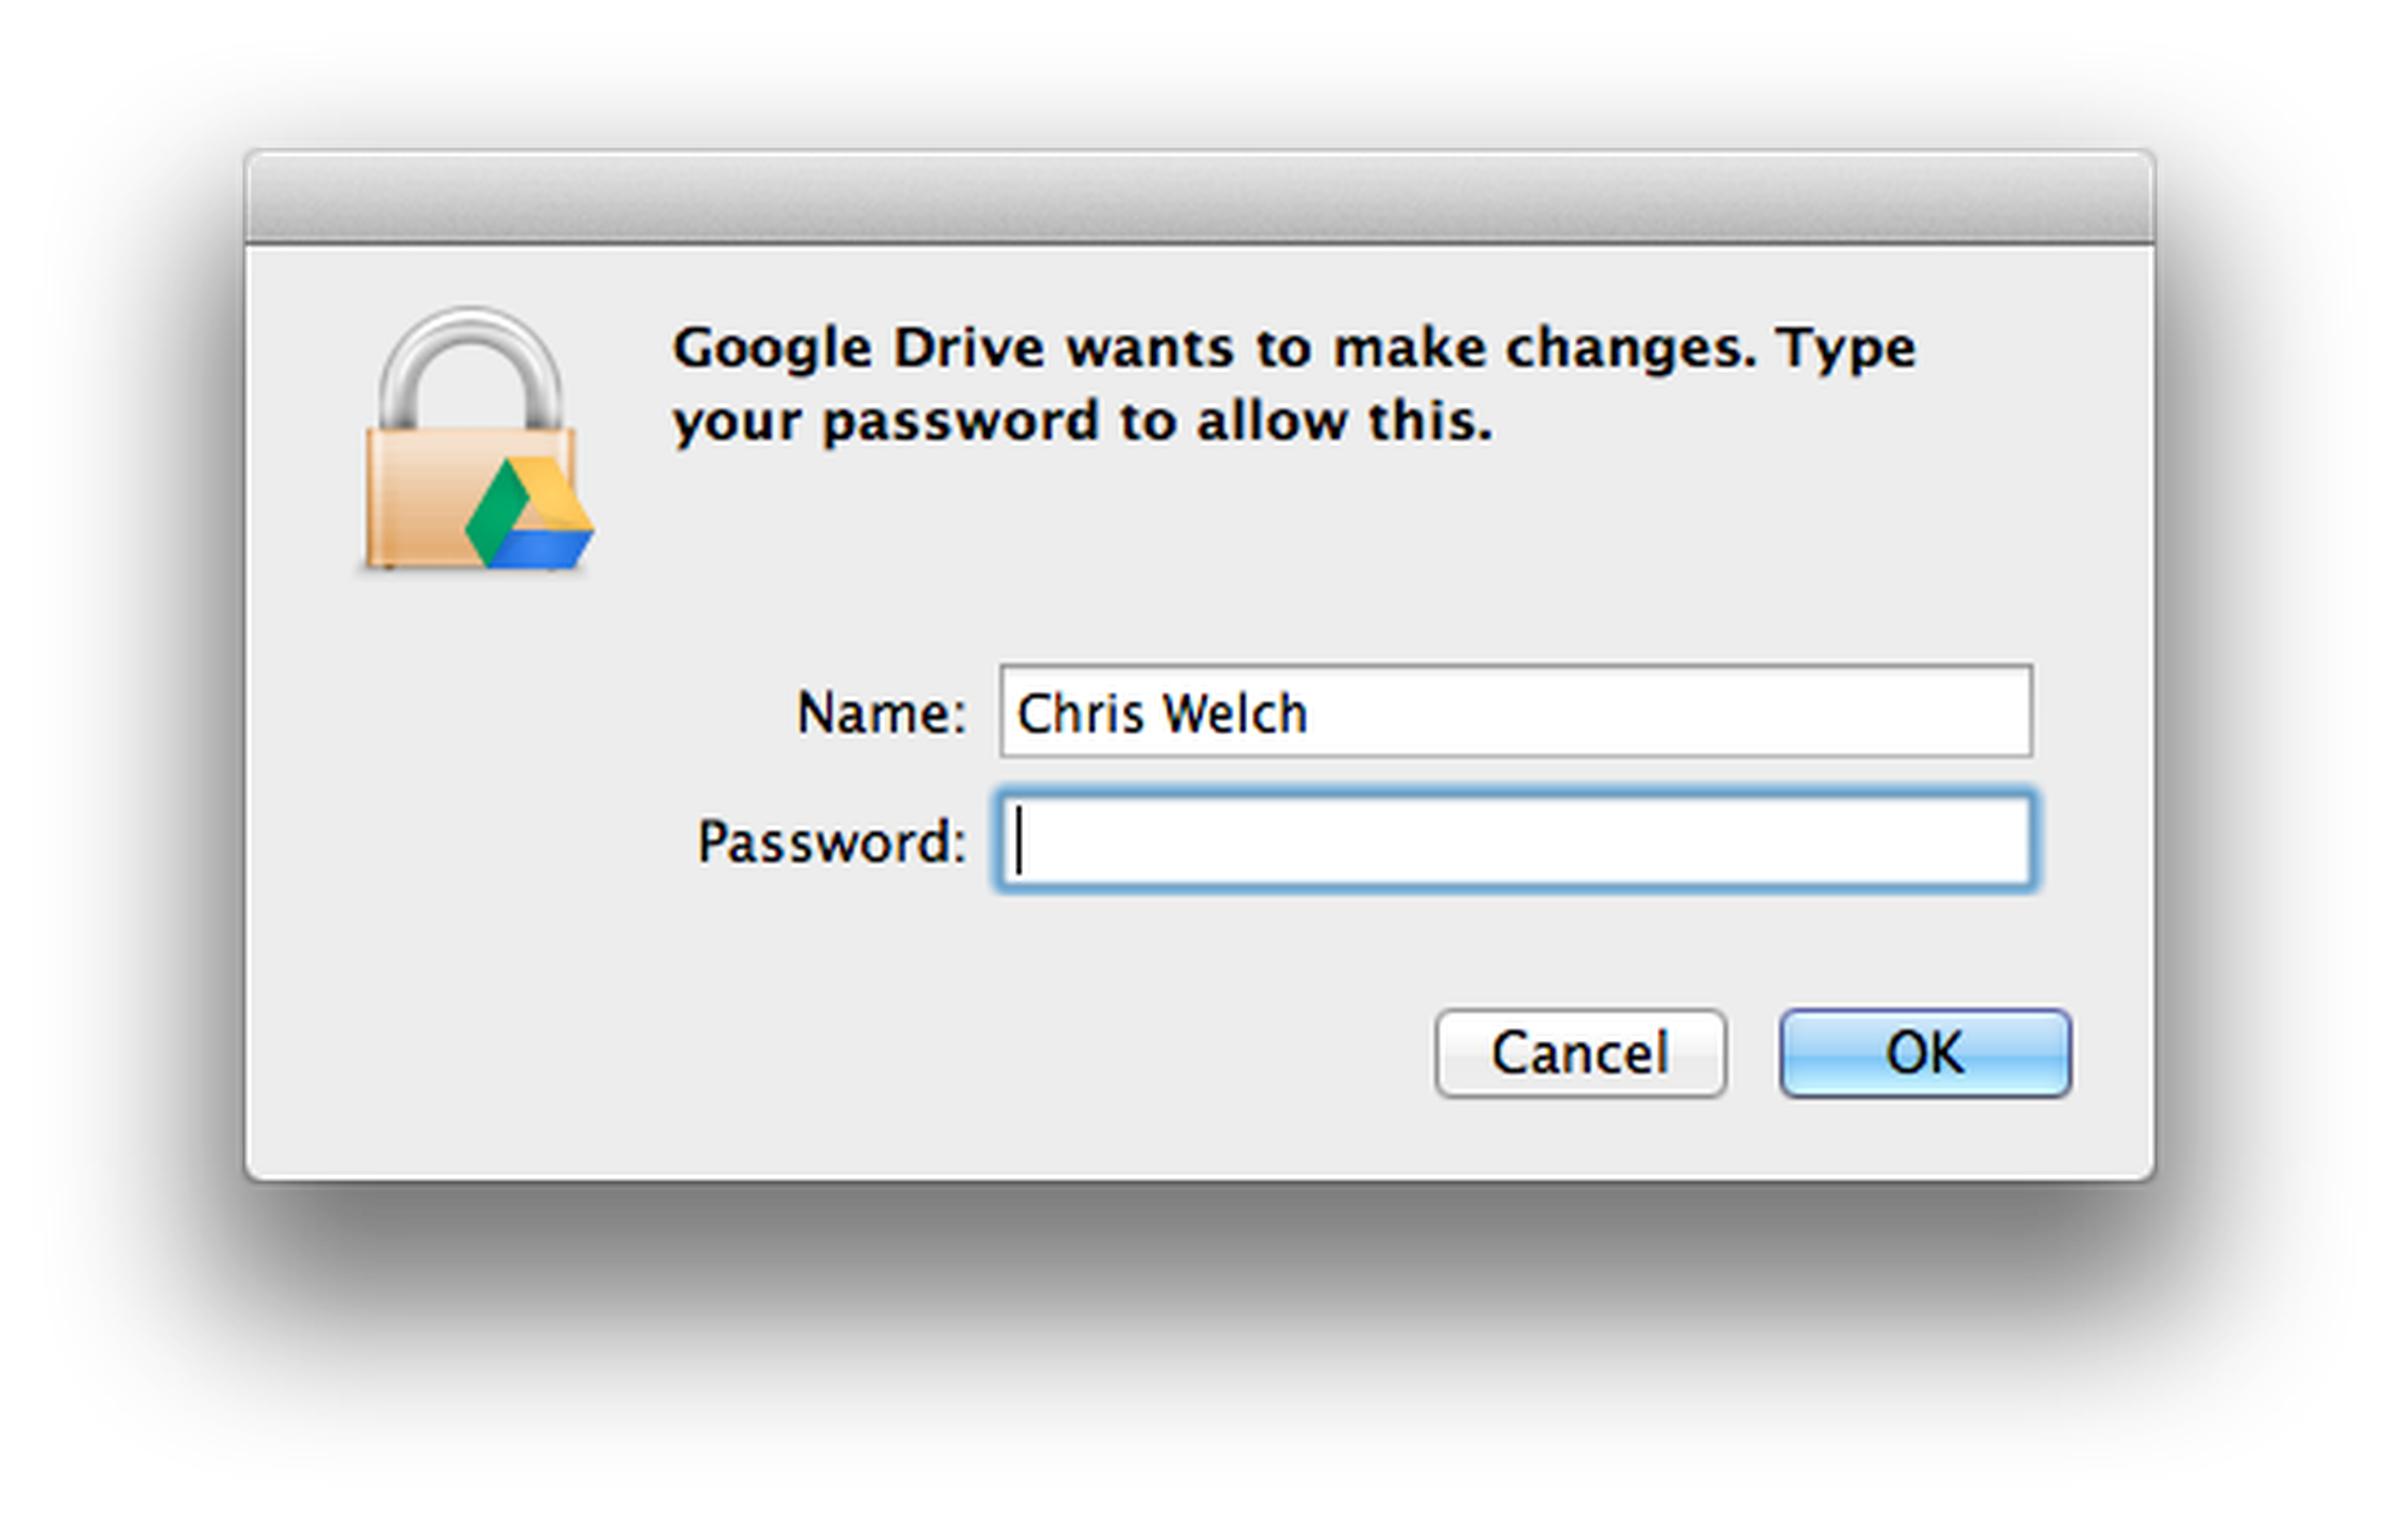 Google Drive web, Mac OS X, and Windows screenshots